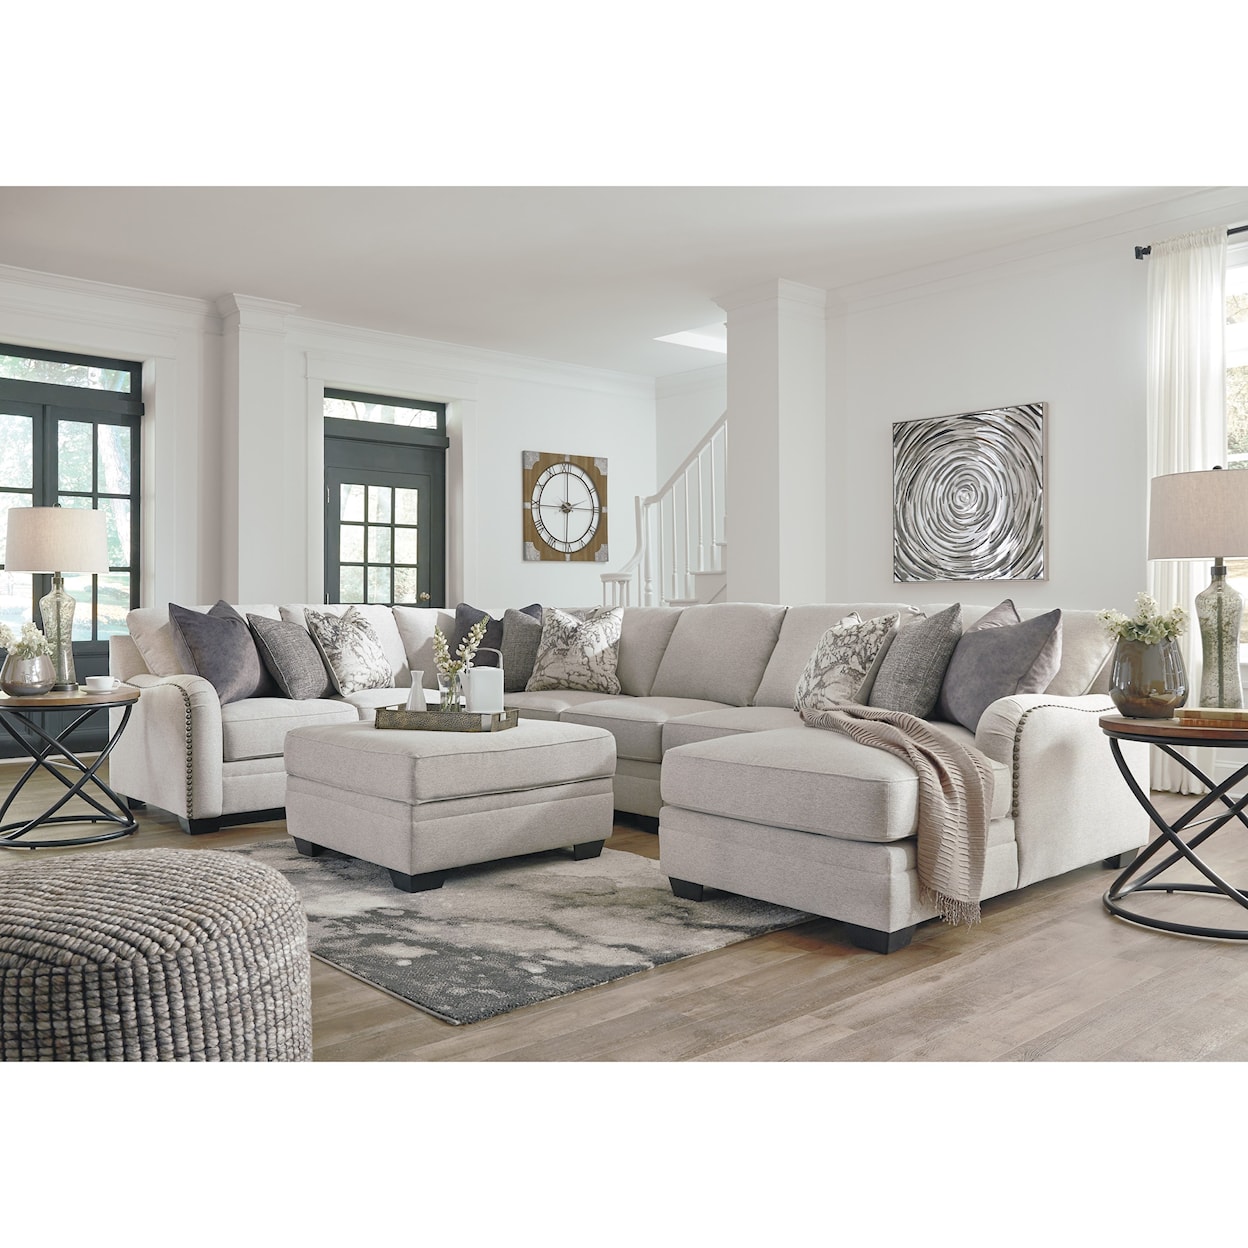 Ashley Furniture Benchcraft Dellara Stationary Living Room Group